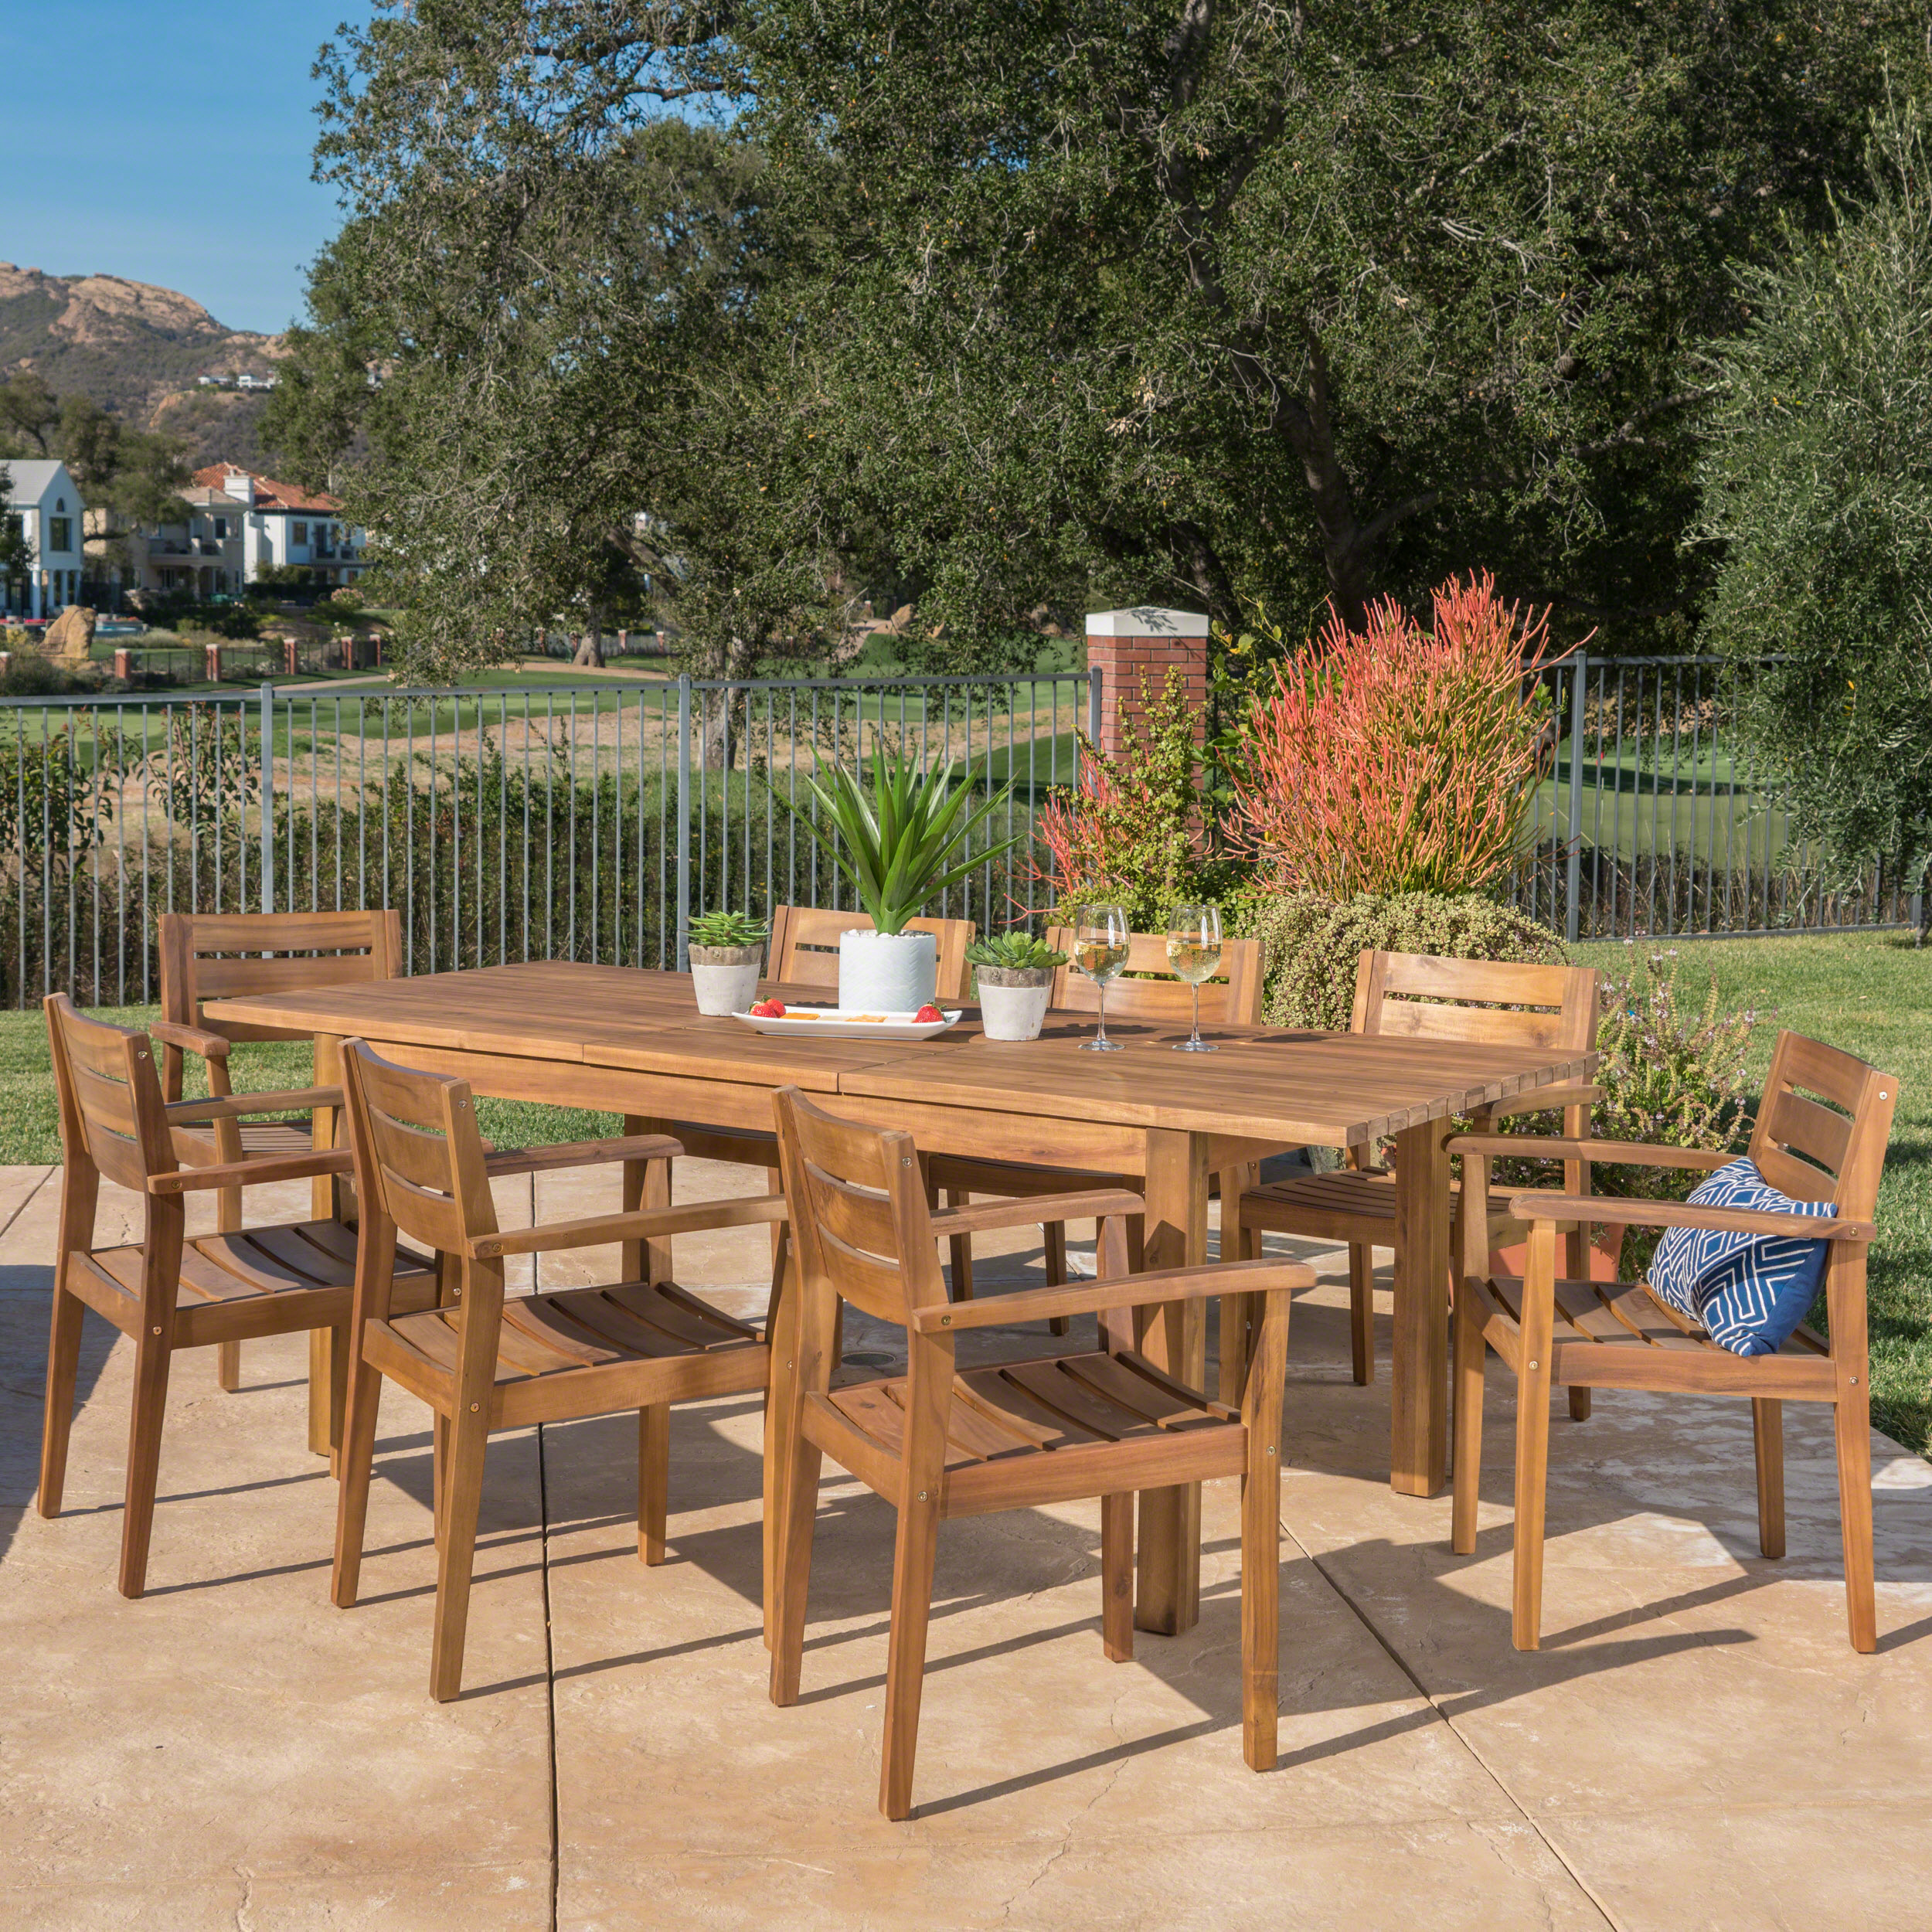 Caroline Outdoor 9-Piece Acacia Wood Dining Set with Expandable Dining Table, Teak Finish - image 1 of 6